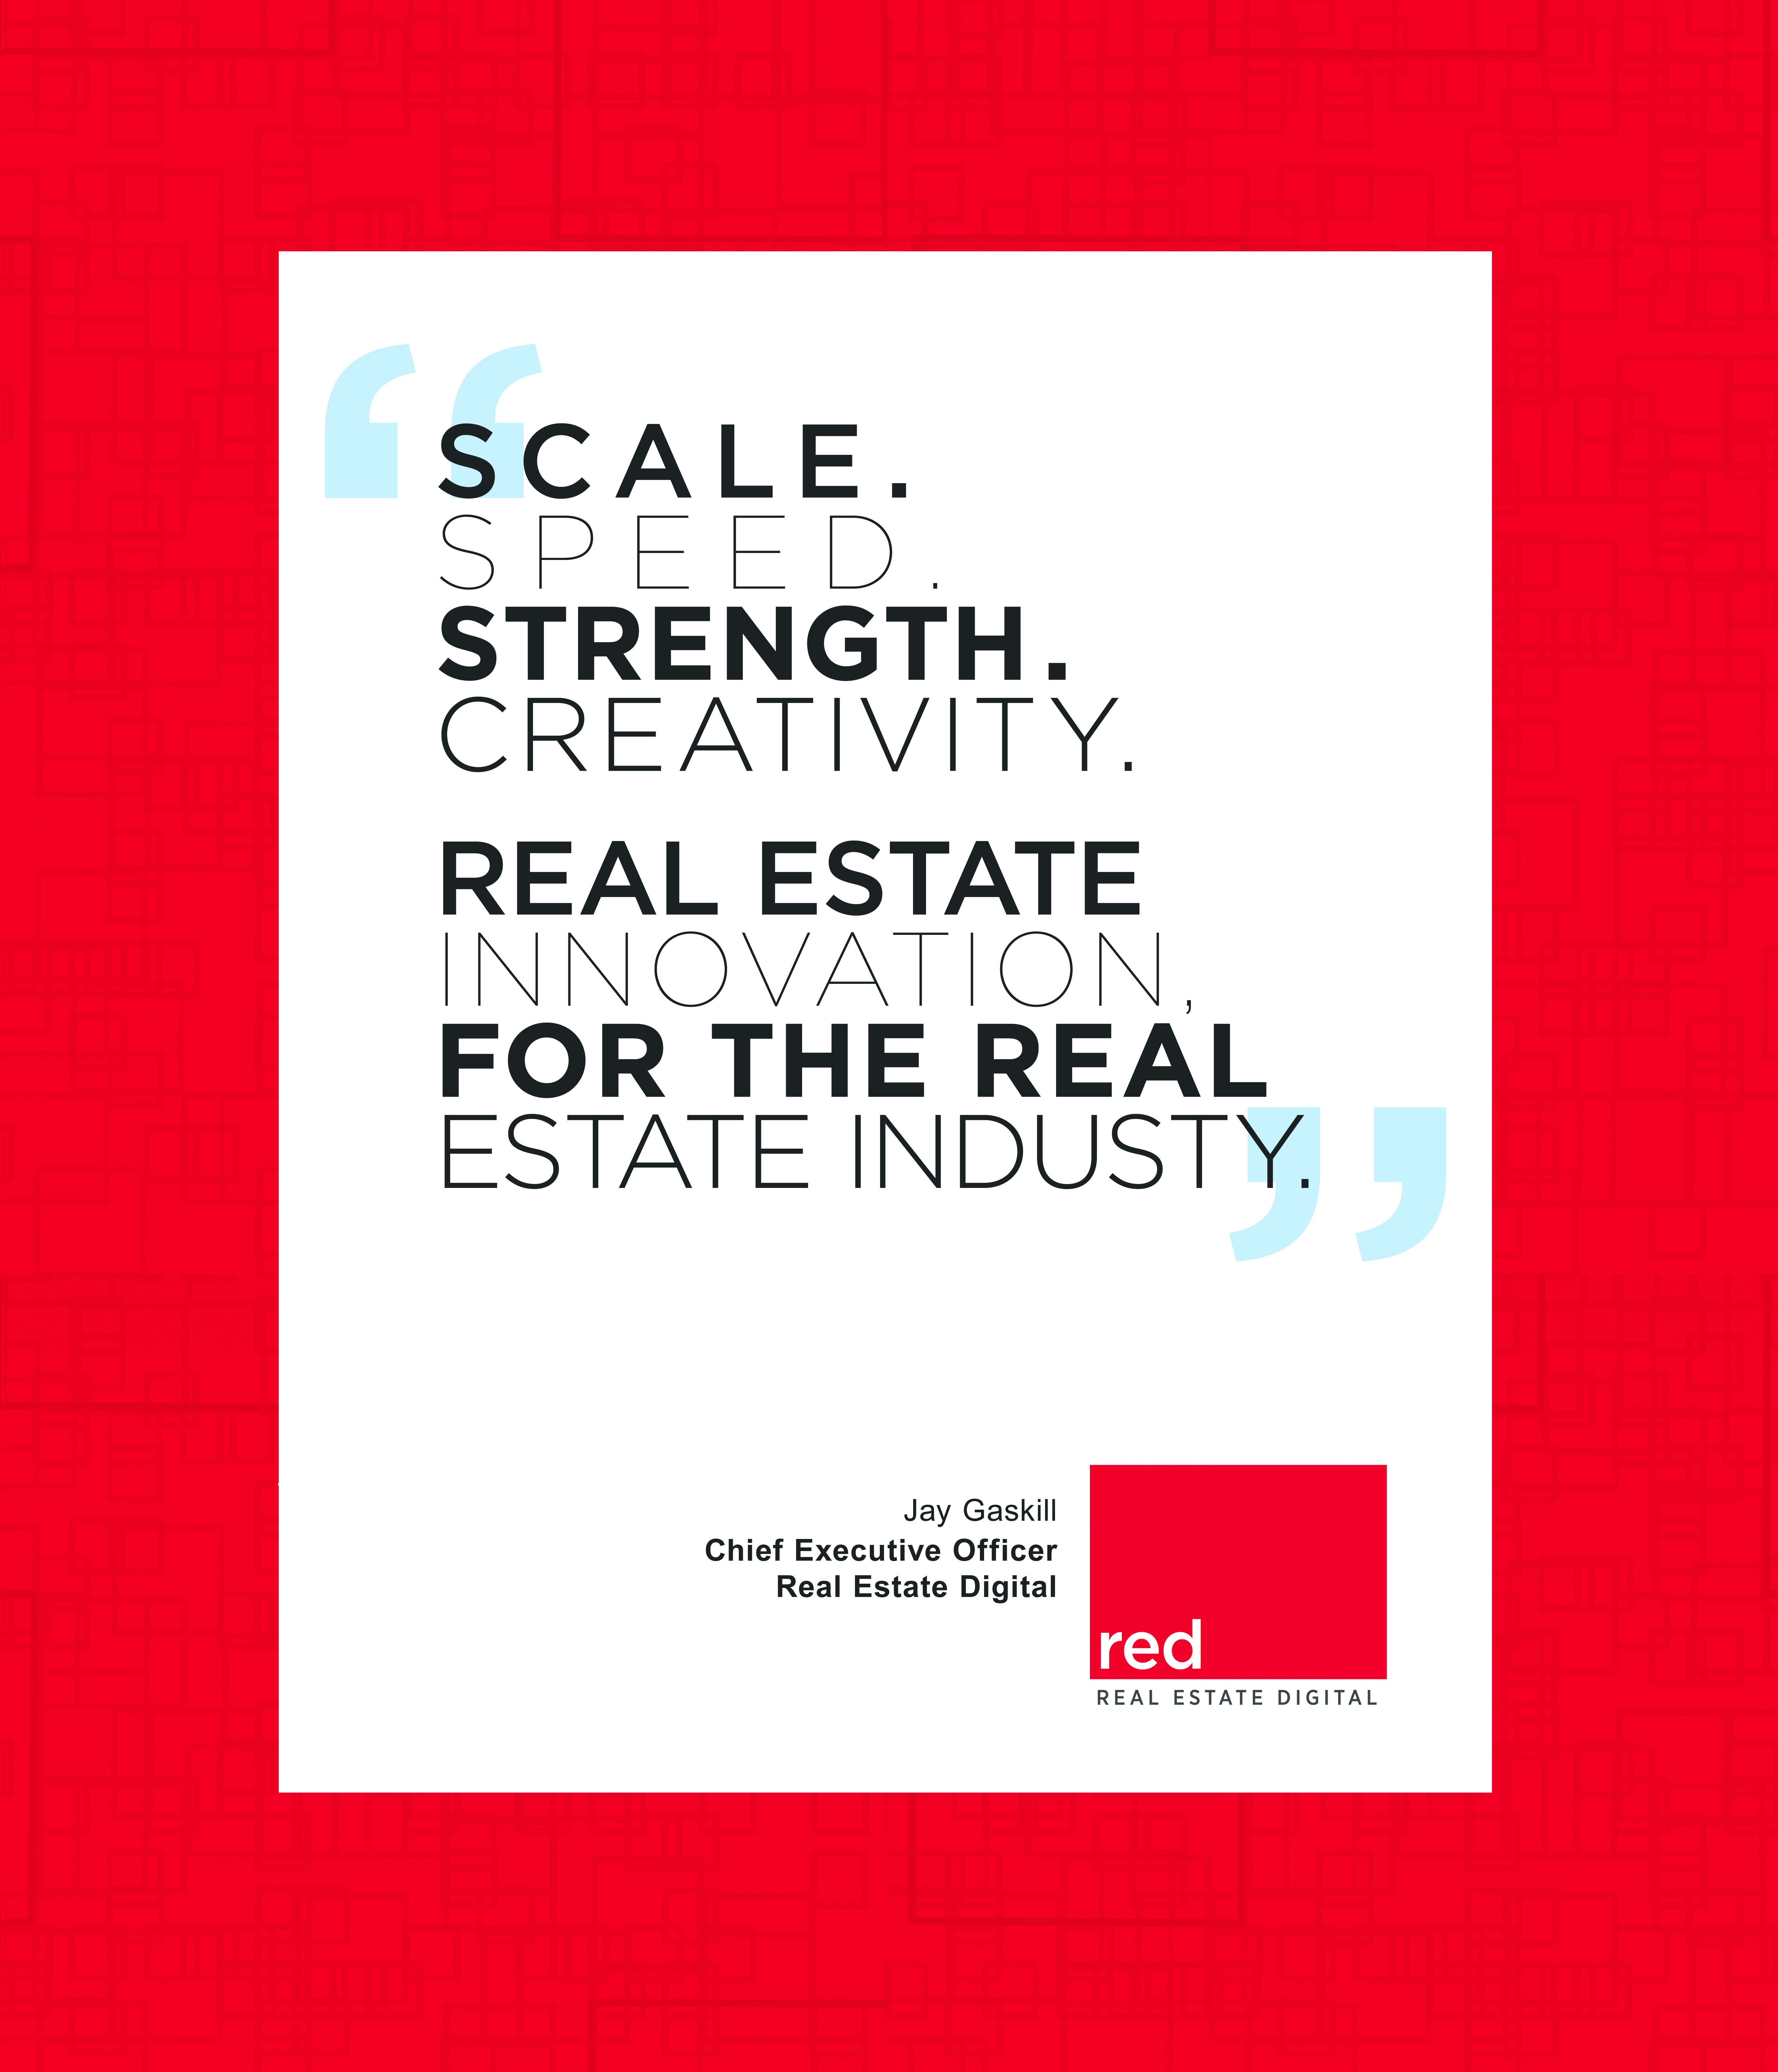 Real Estate Digital Poster1